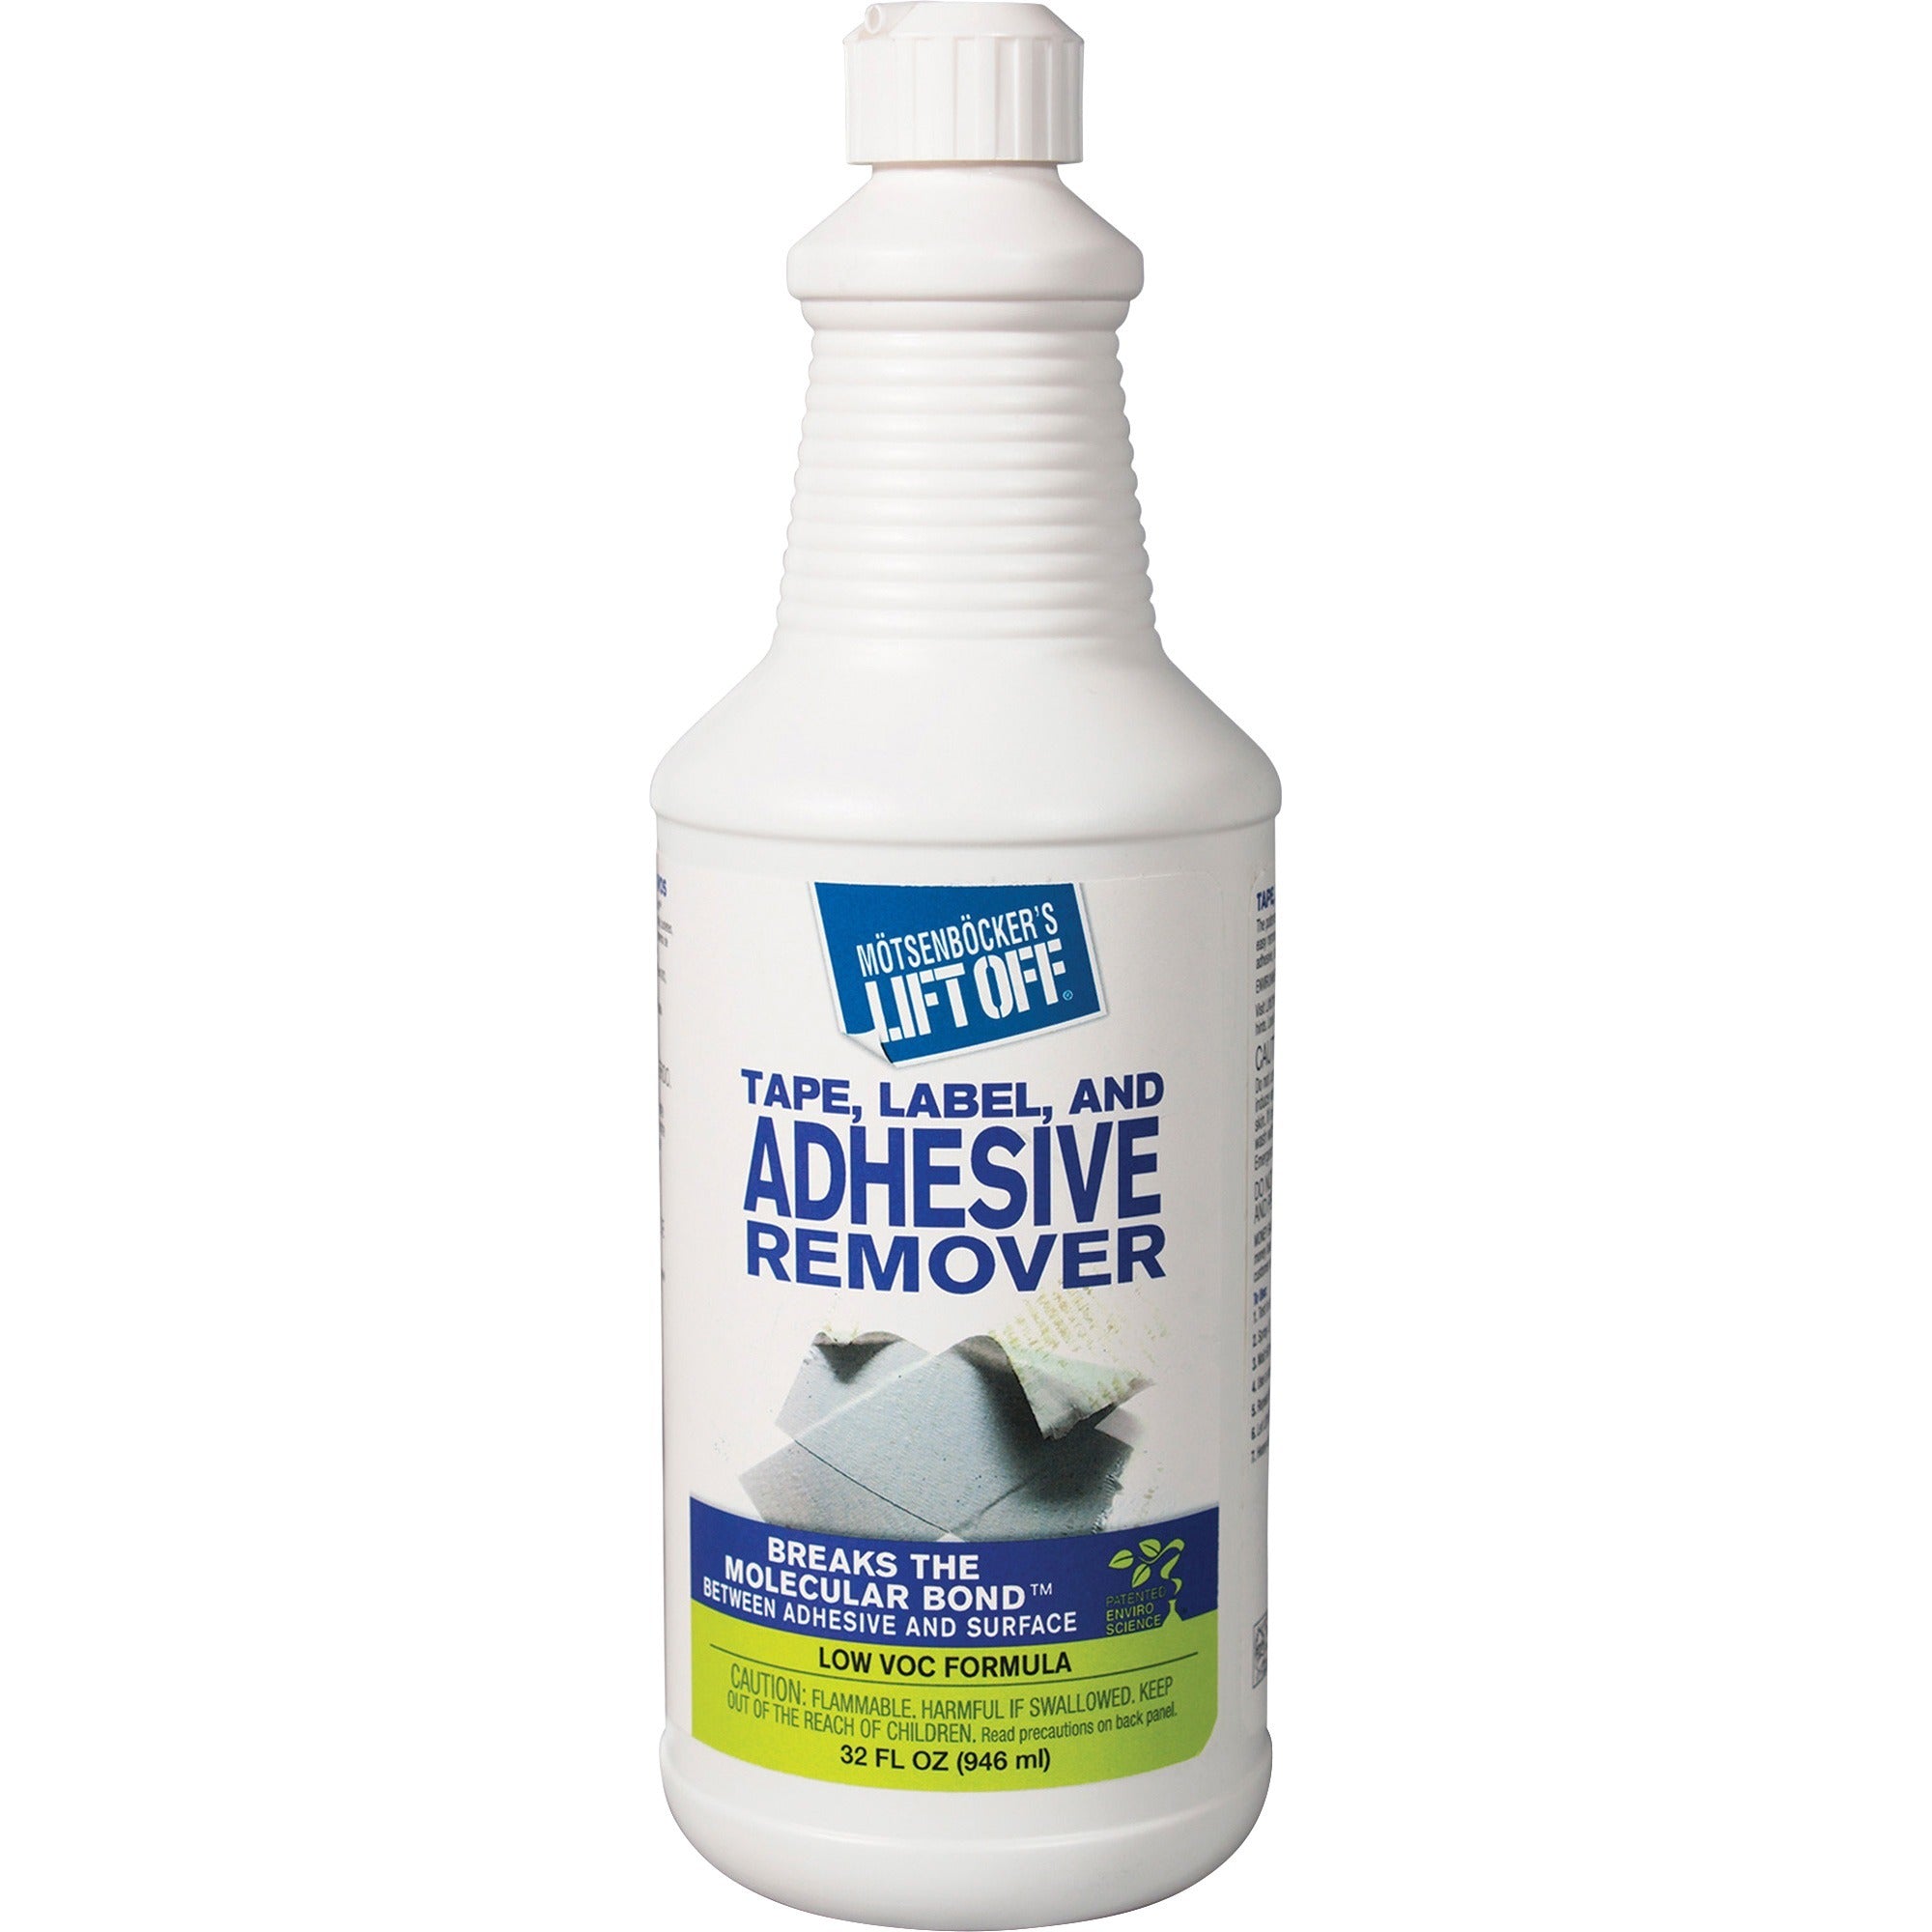 mtsenbckers-lift-off-tape-label-adhesive-remover-1-quart-for-tape-adhesive-label-adhesive-grease-oil-gum-tar-spray-adhesive-sticker-adhesive-chewing-gum-wax-glue-residue-remover-white-6-carton_mot40703ct - 2